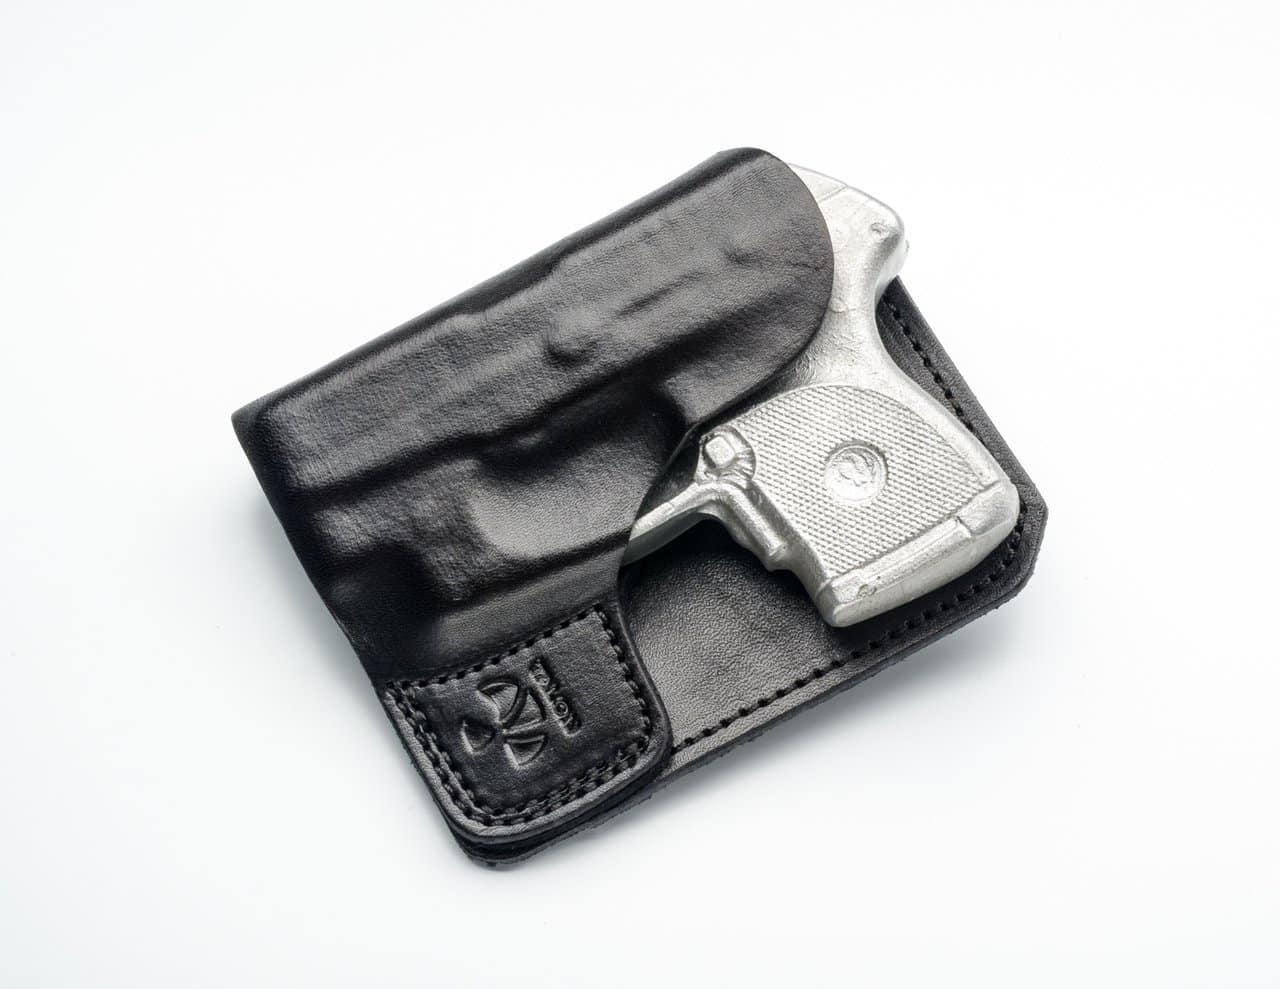 Holster Wallet Pocket Lcp Talon Ruger Sig P938 Holsters Leather Concealed.....